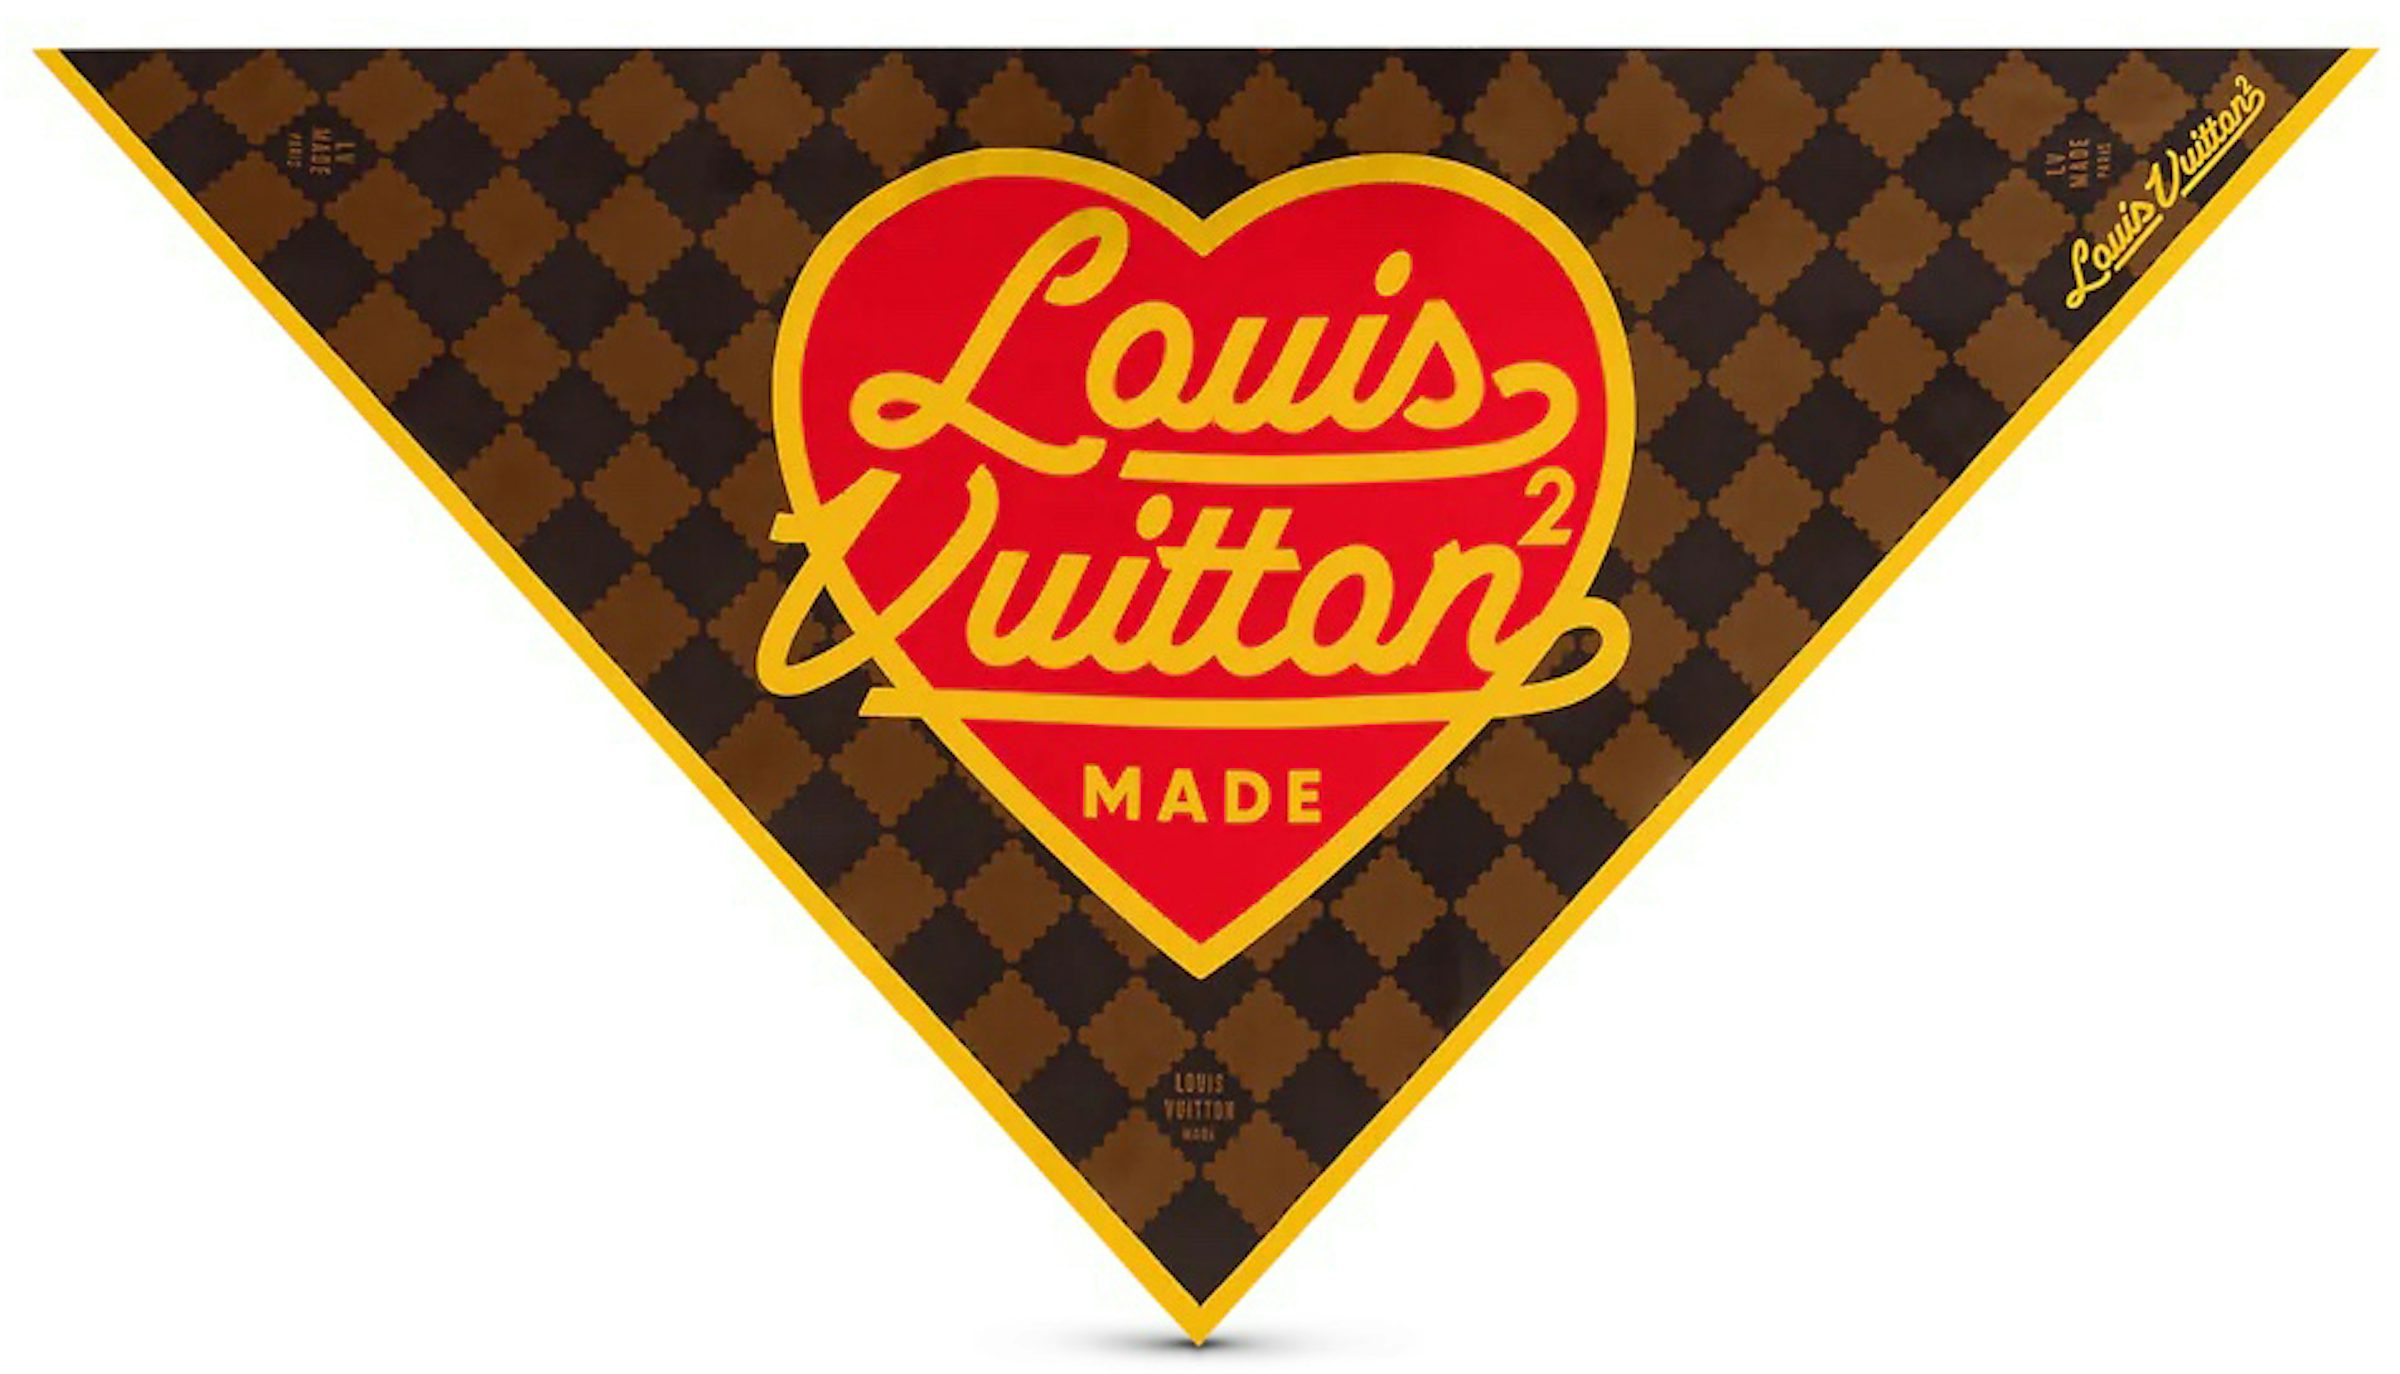 Louis Vuitton LV Ski Mask